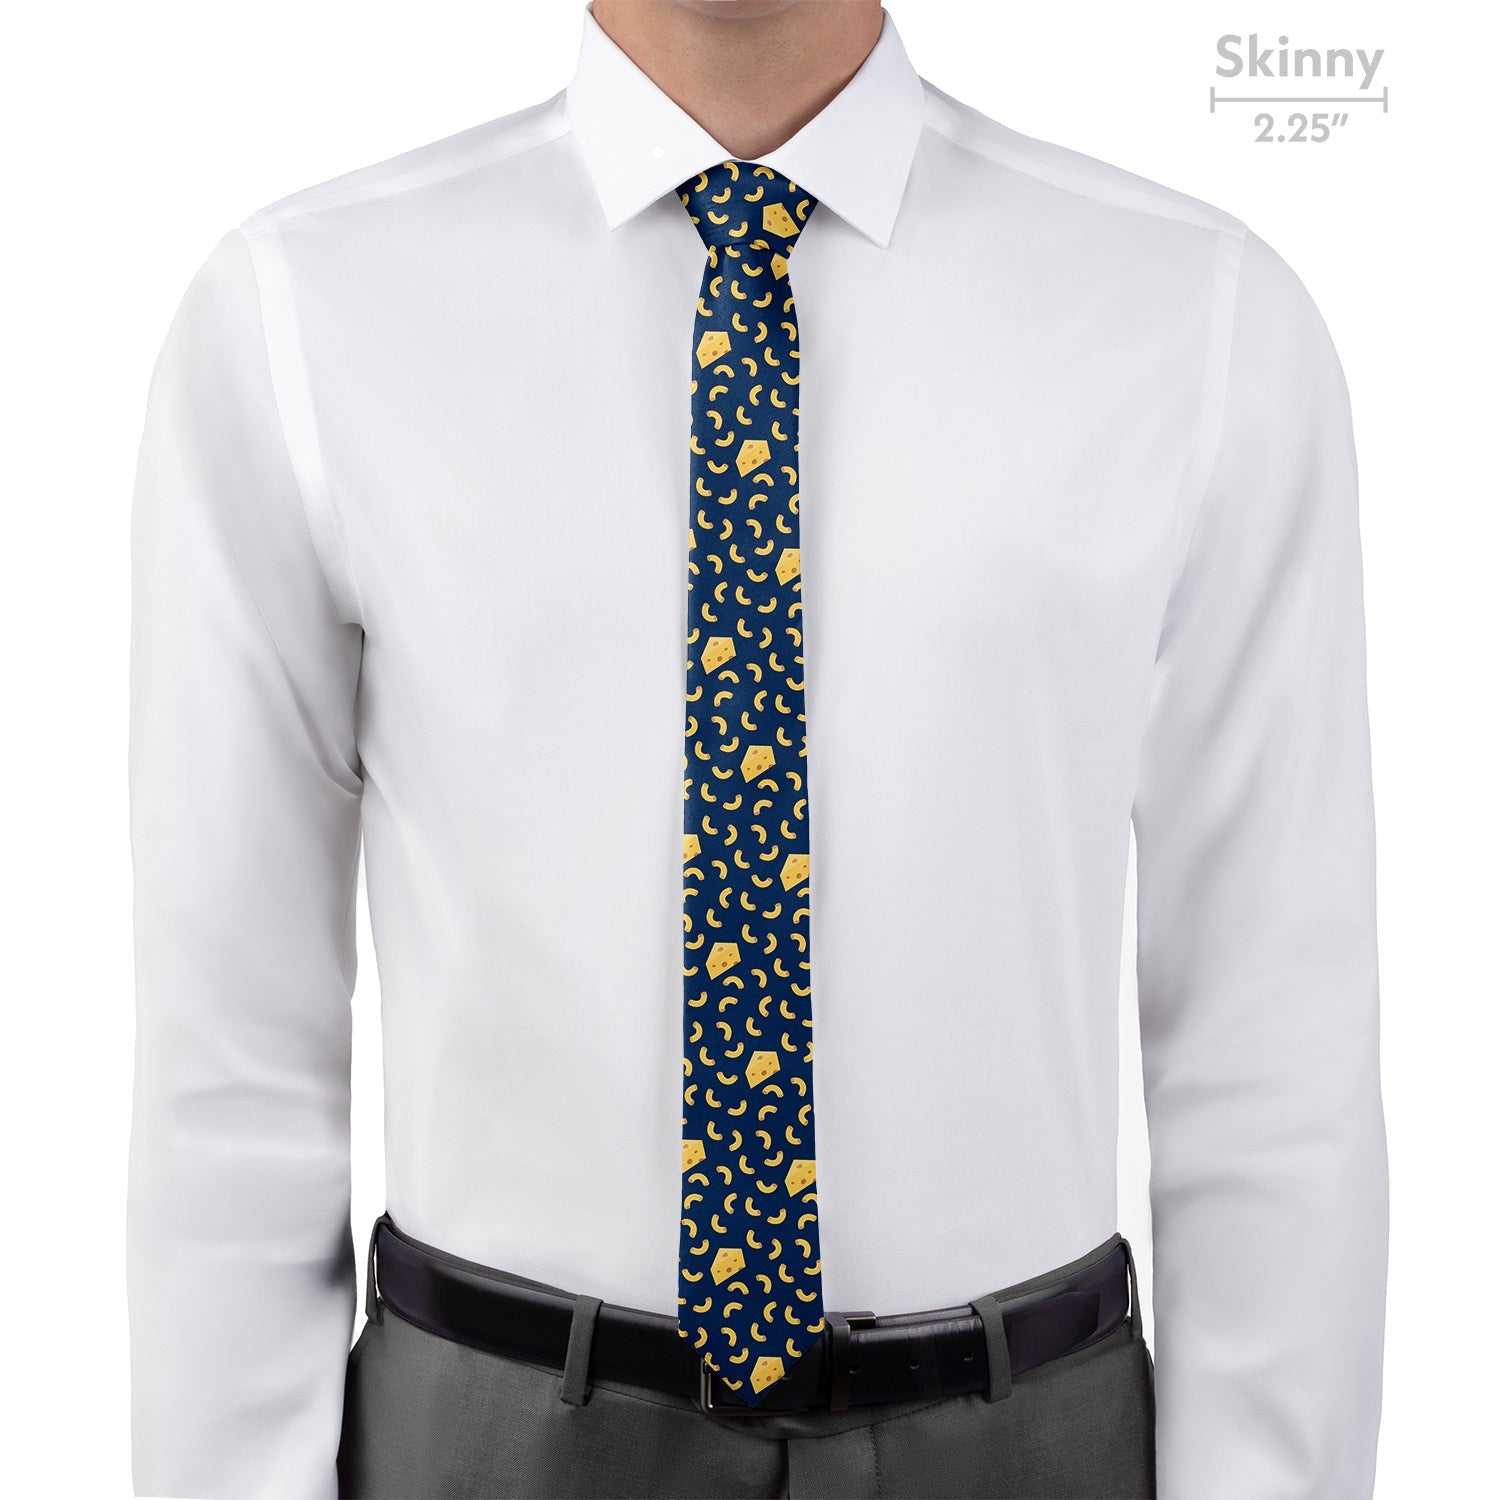 Mac N Cheese Necktie - Skinny - Knotty Tie Co.